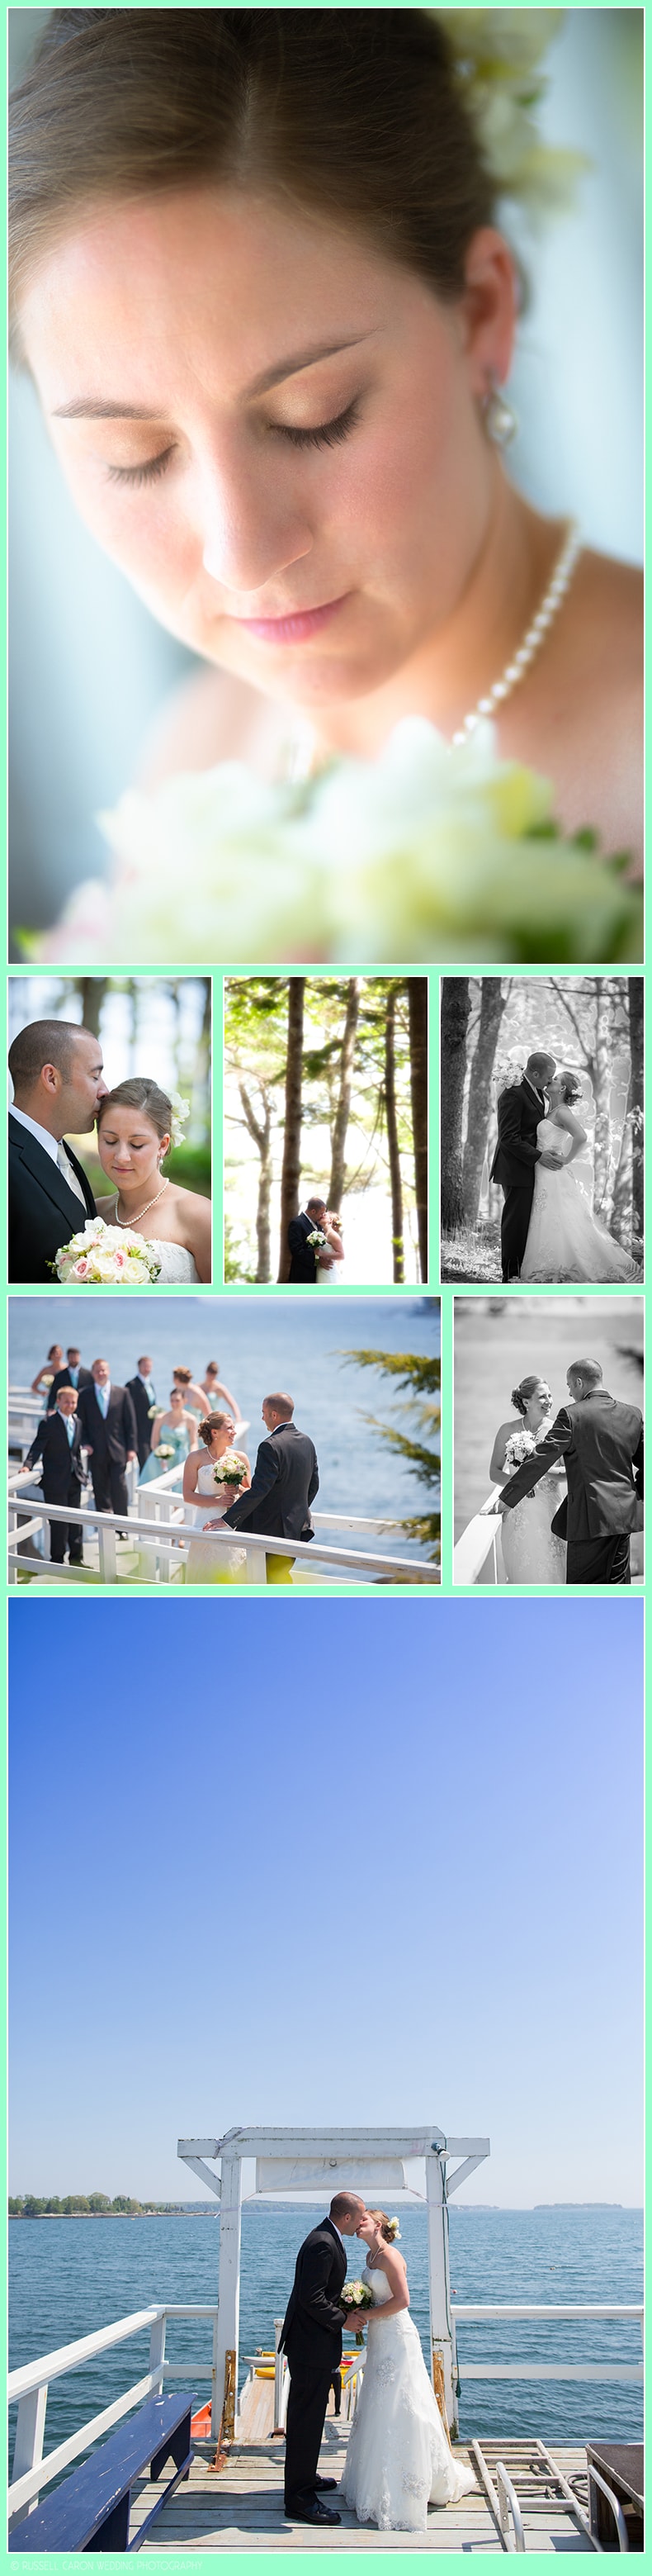 Linekin Bay Resort wedding photography